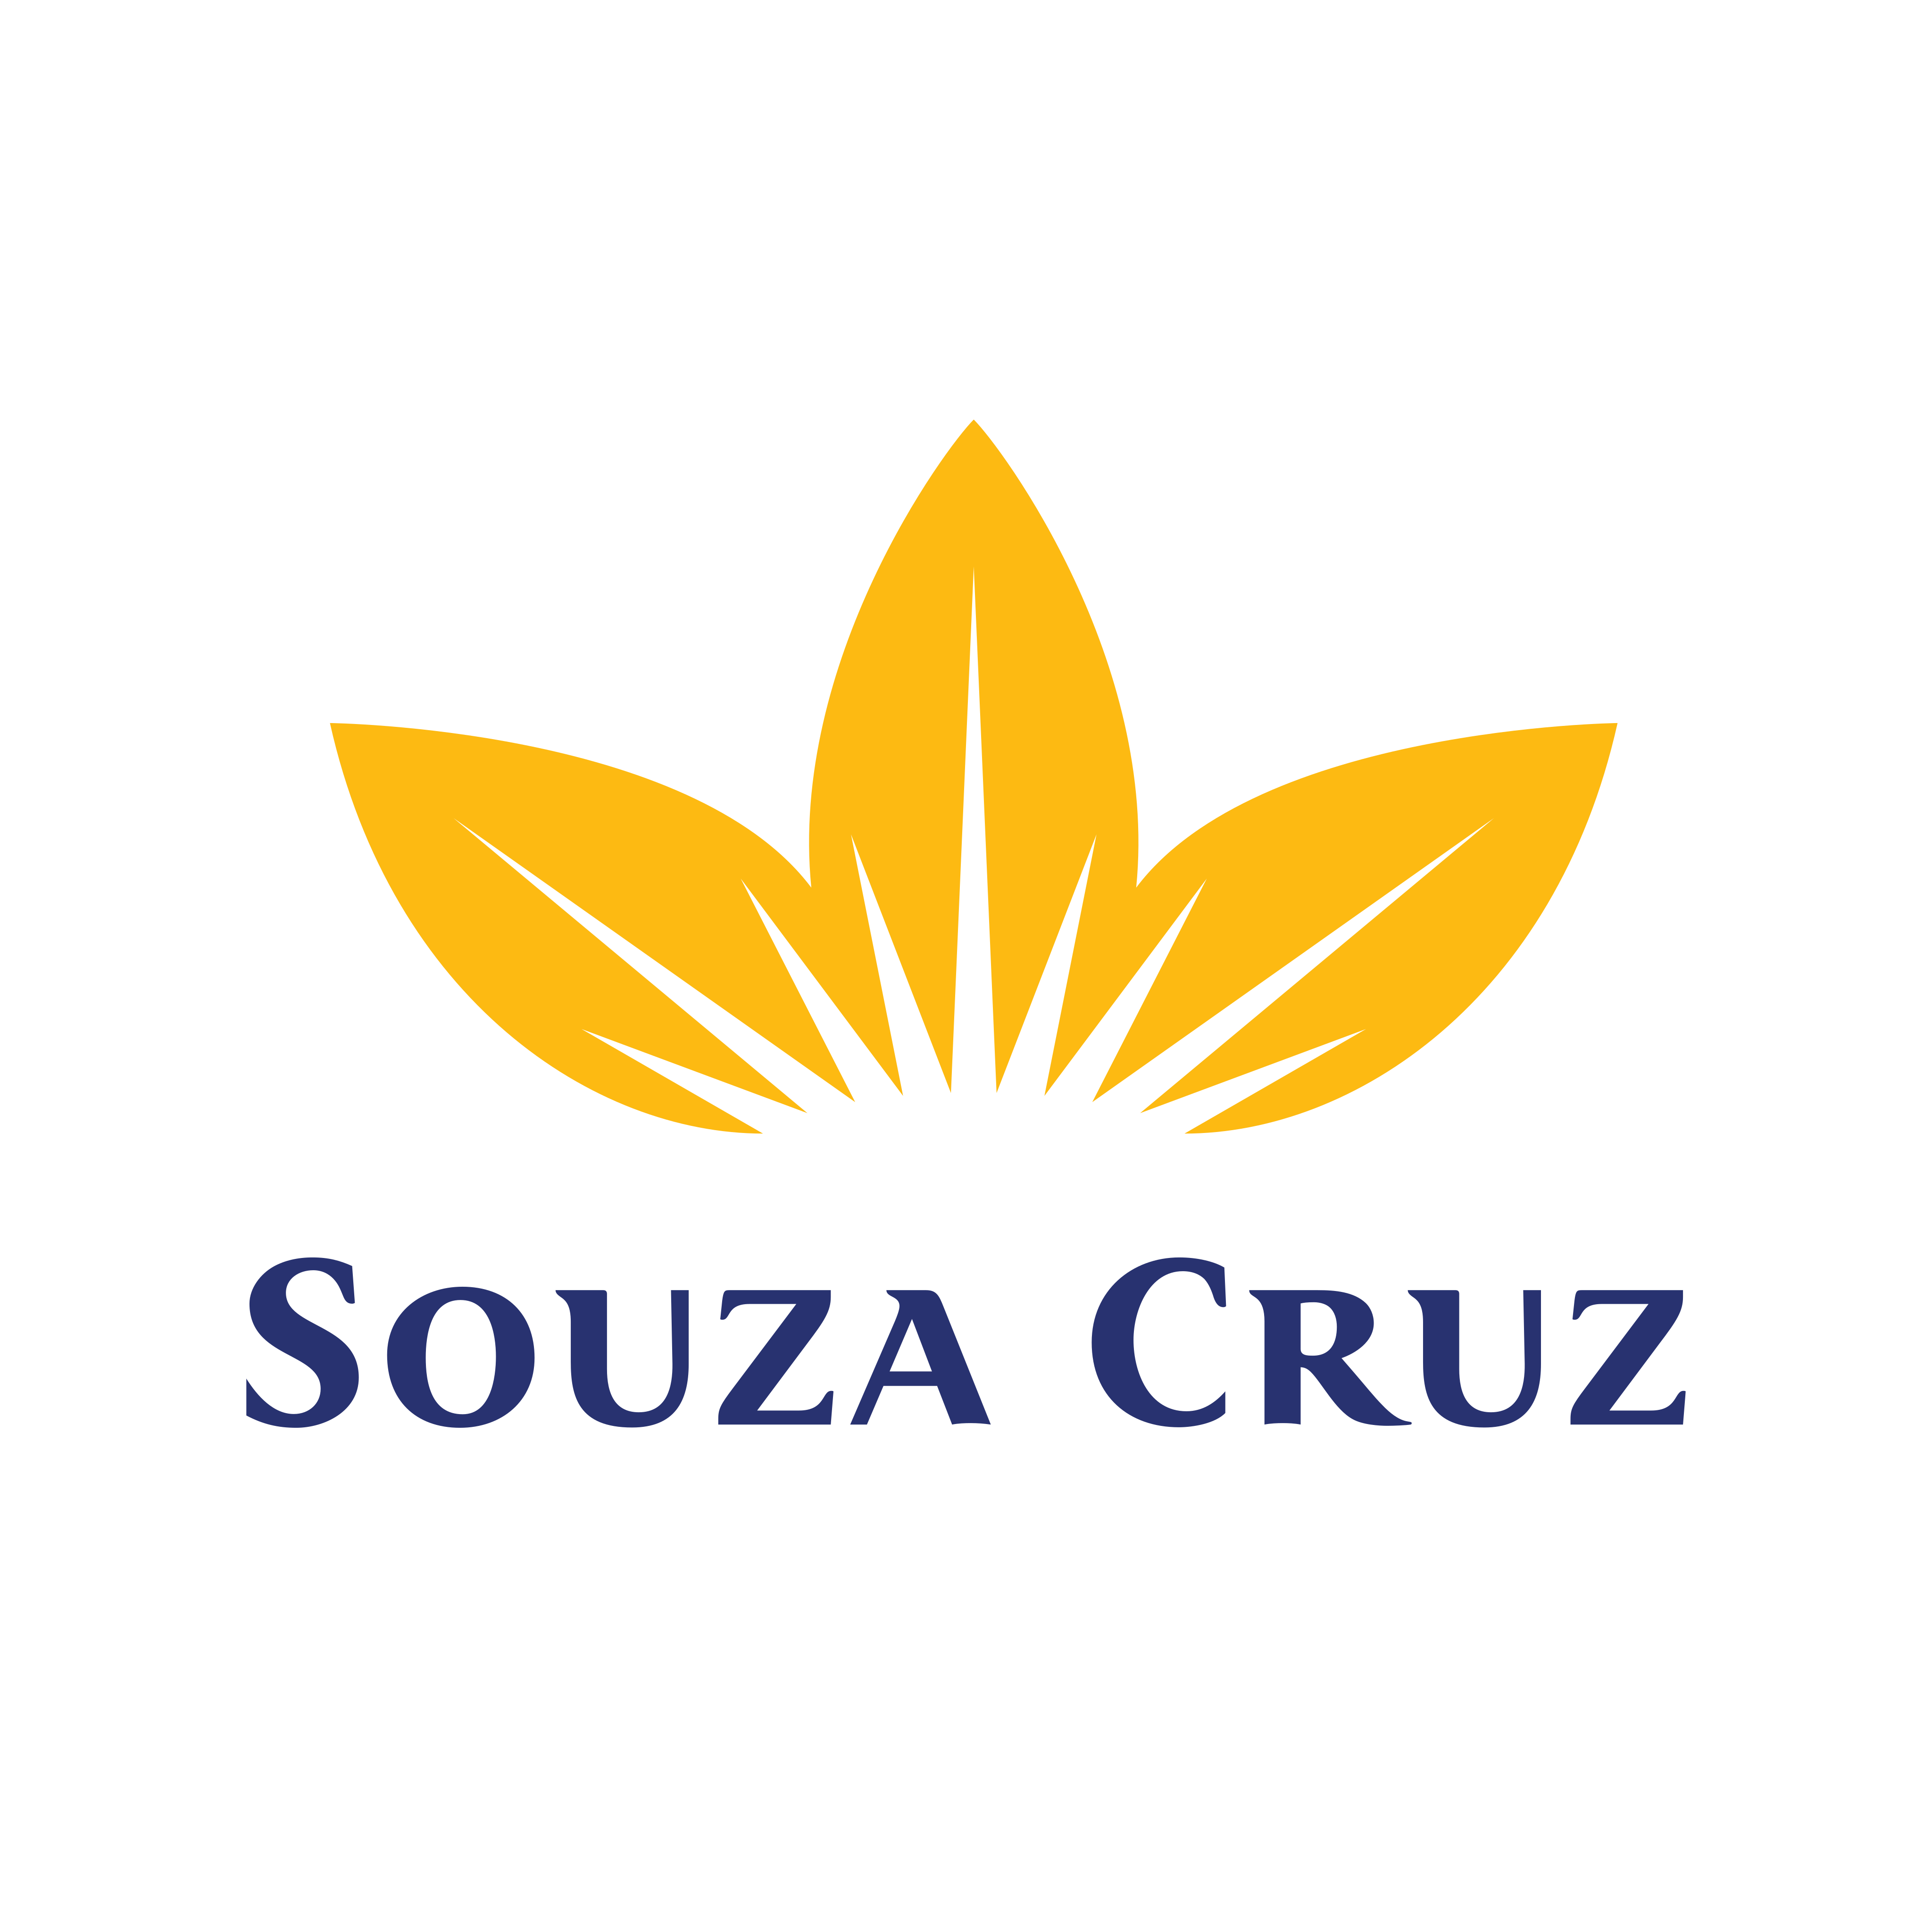 Souza Cruz Logo PNG.